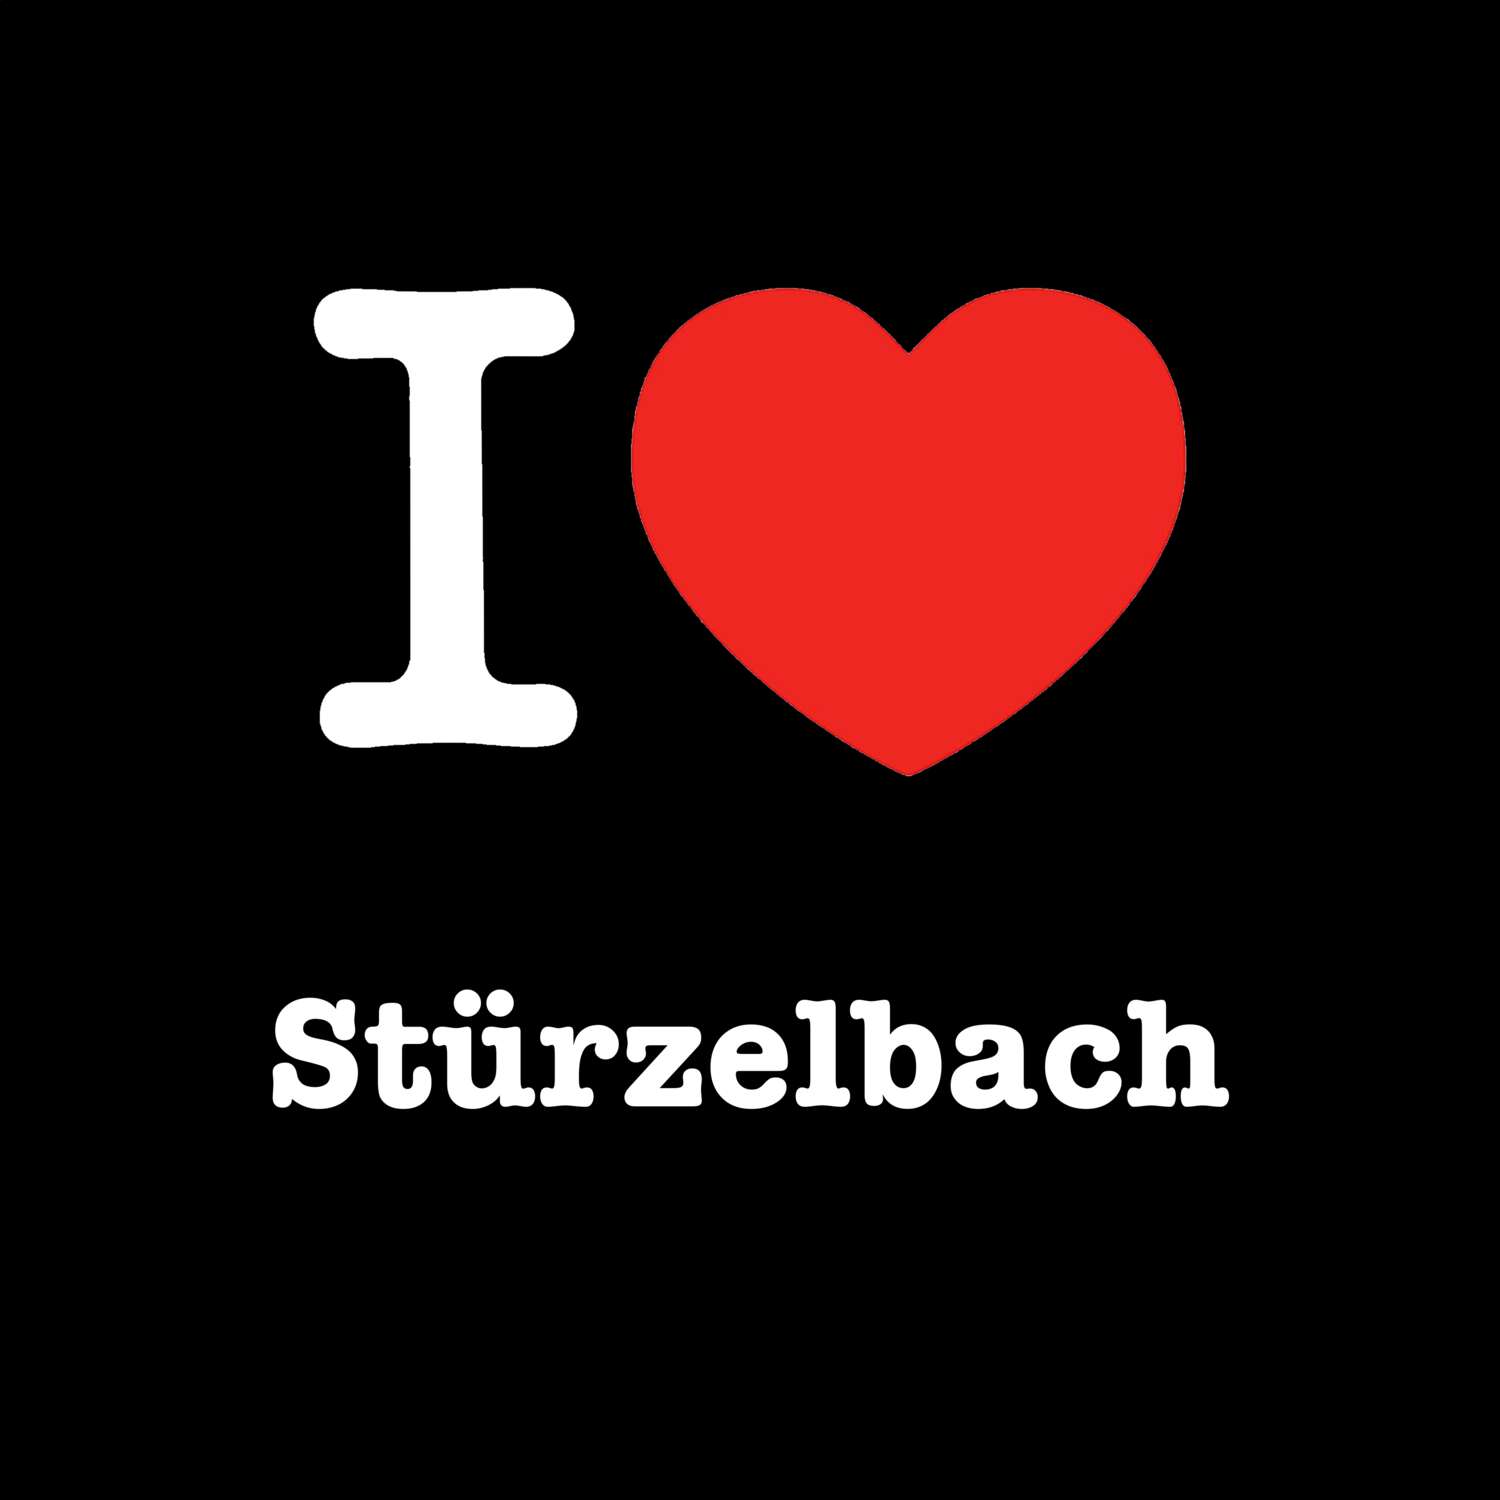 Stürzelbach T-Shirt »I love«